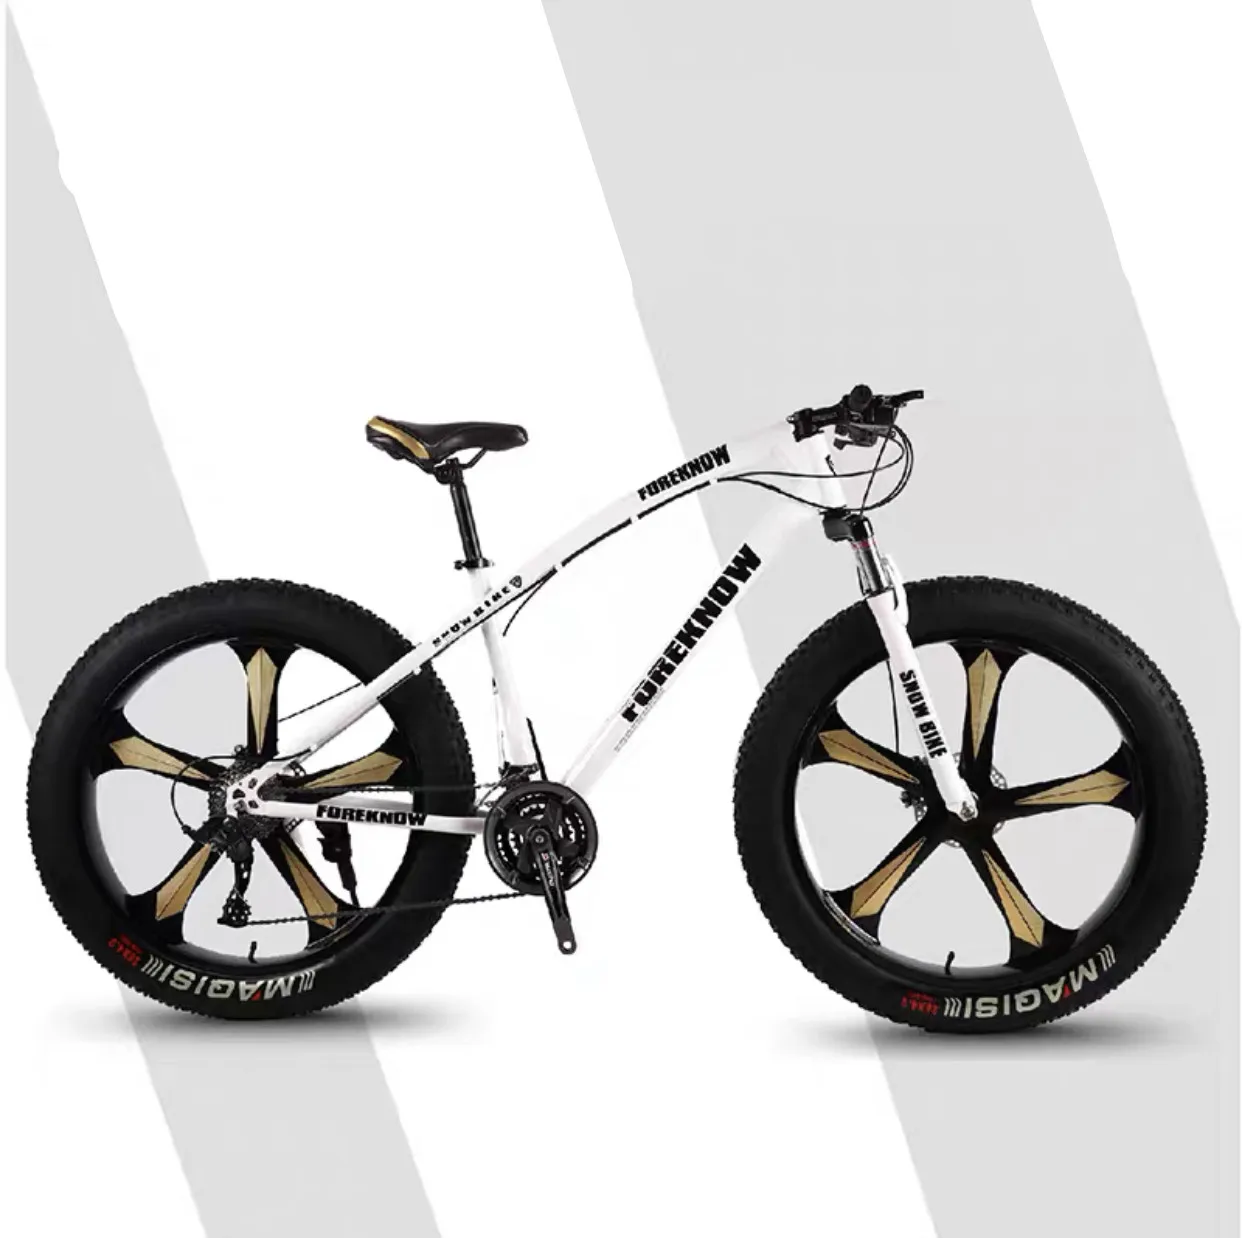 

Factory Hot Sale 20" Mongoose Fat Tire Mountain Bike 26 Pouce, Can customized